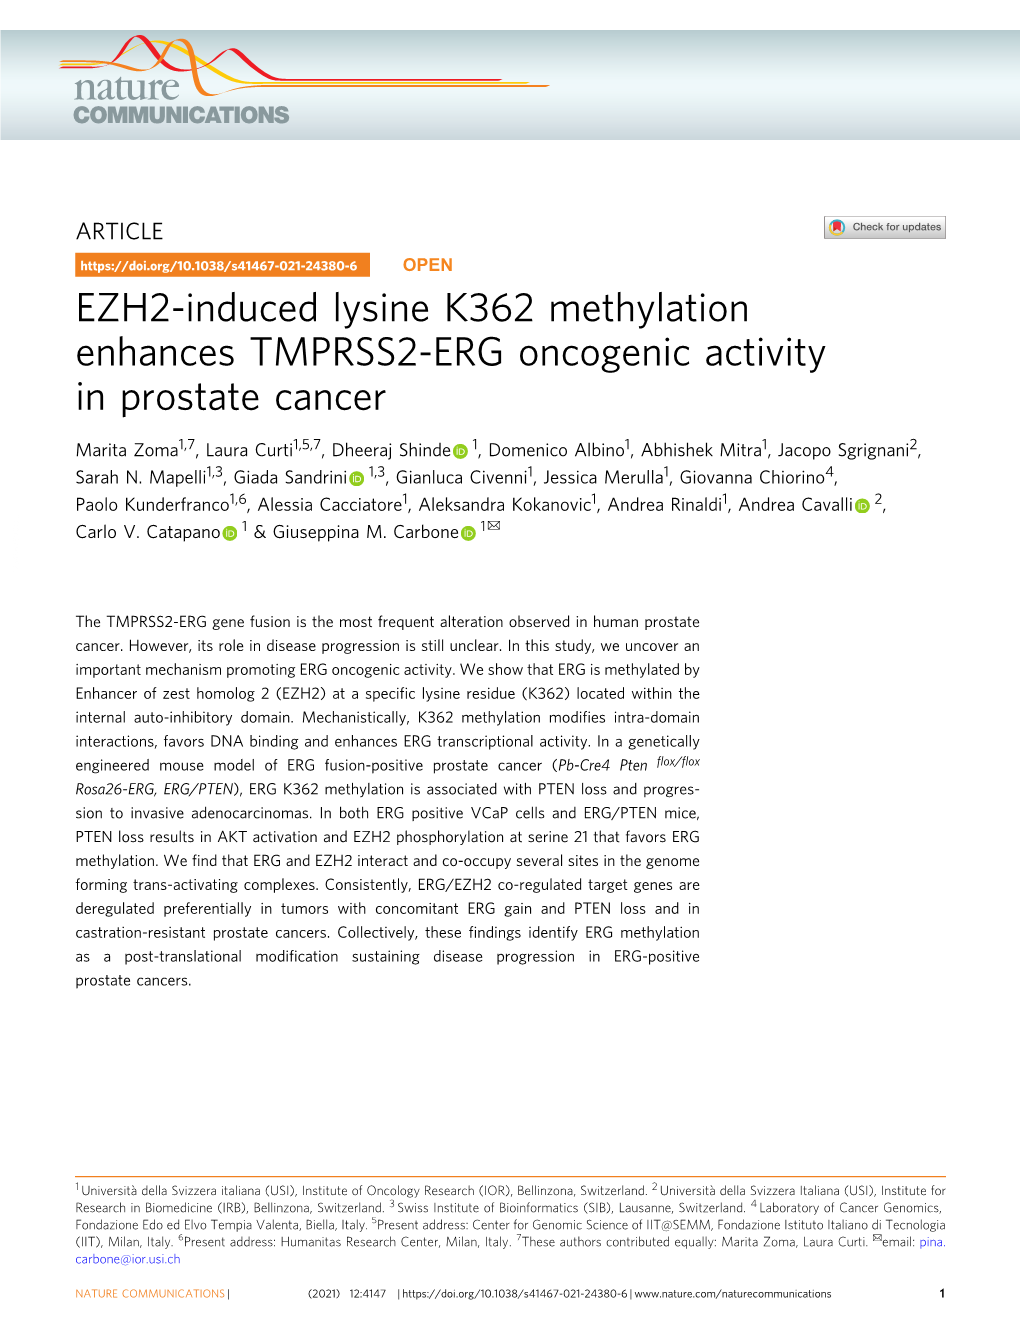 EZH2-Induced Lysine K362 Methylation Enhances TMPRSS2-ERG Oncogenic Activity in Prostate Cancer